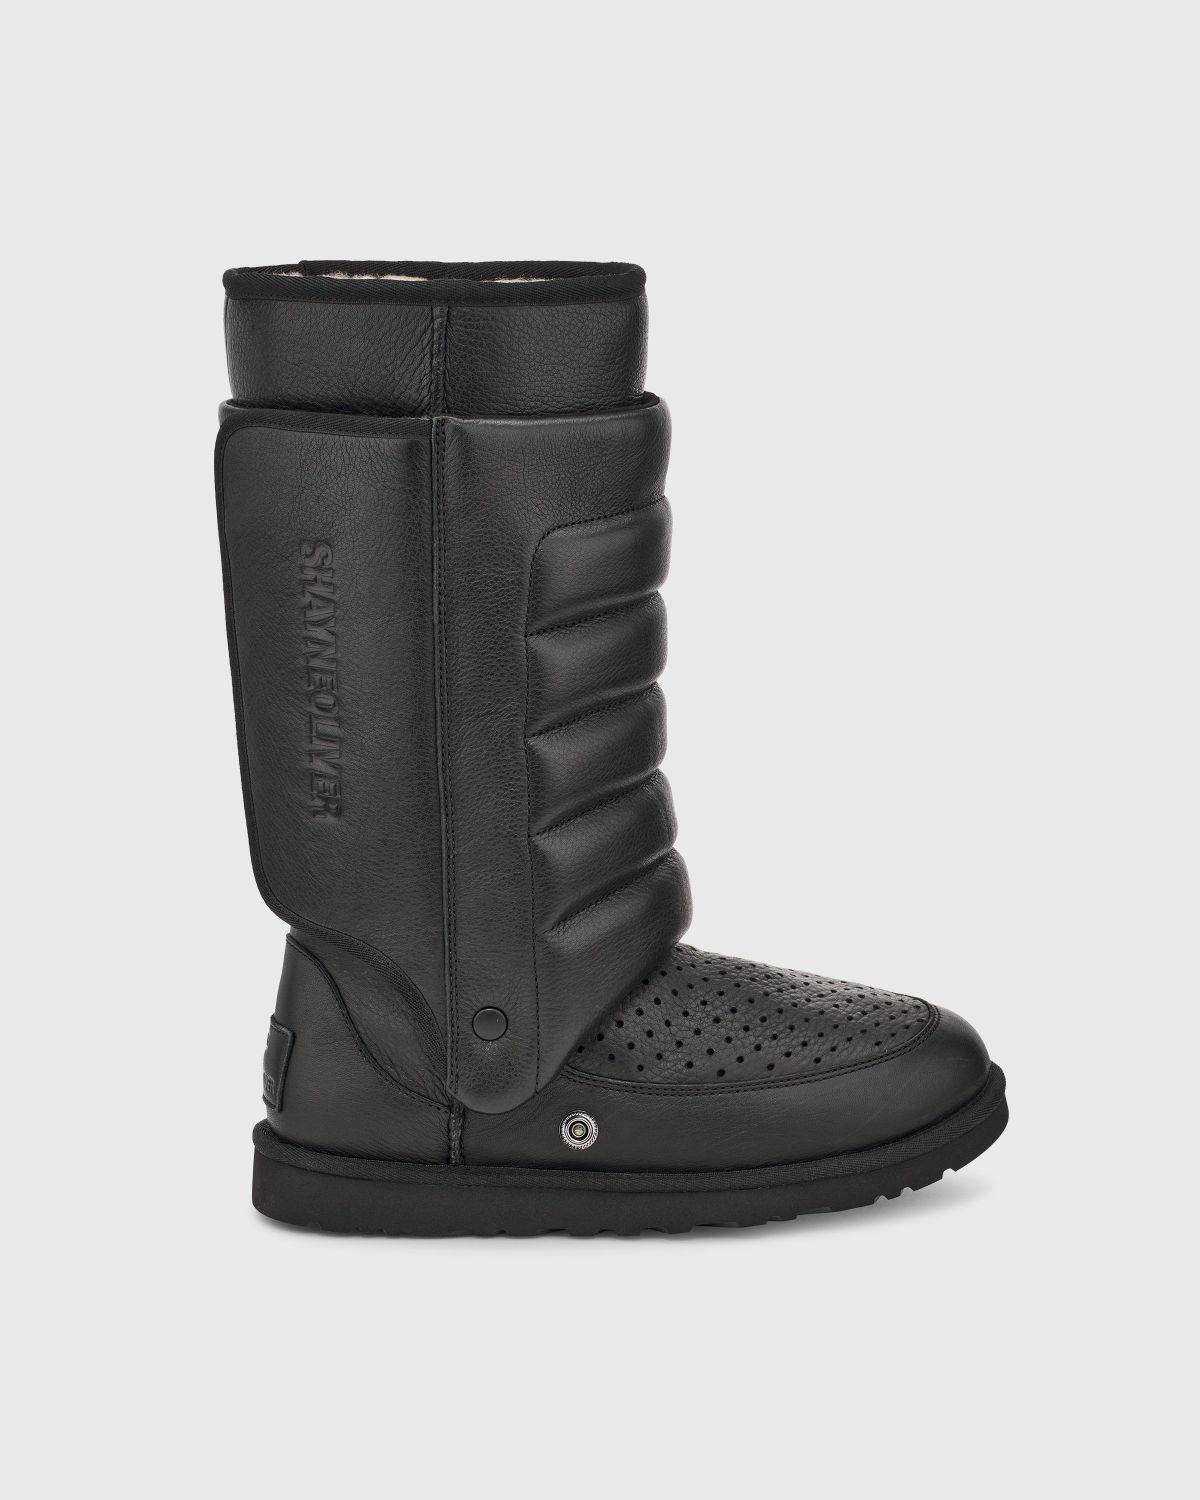 Ugg x Shayne Oliver – Tall Boot Black - Lined Boots - Black - Image 4